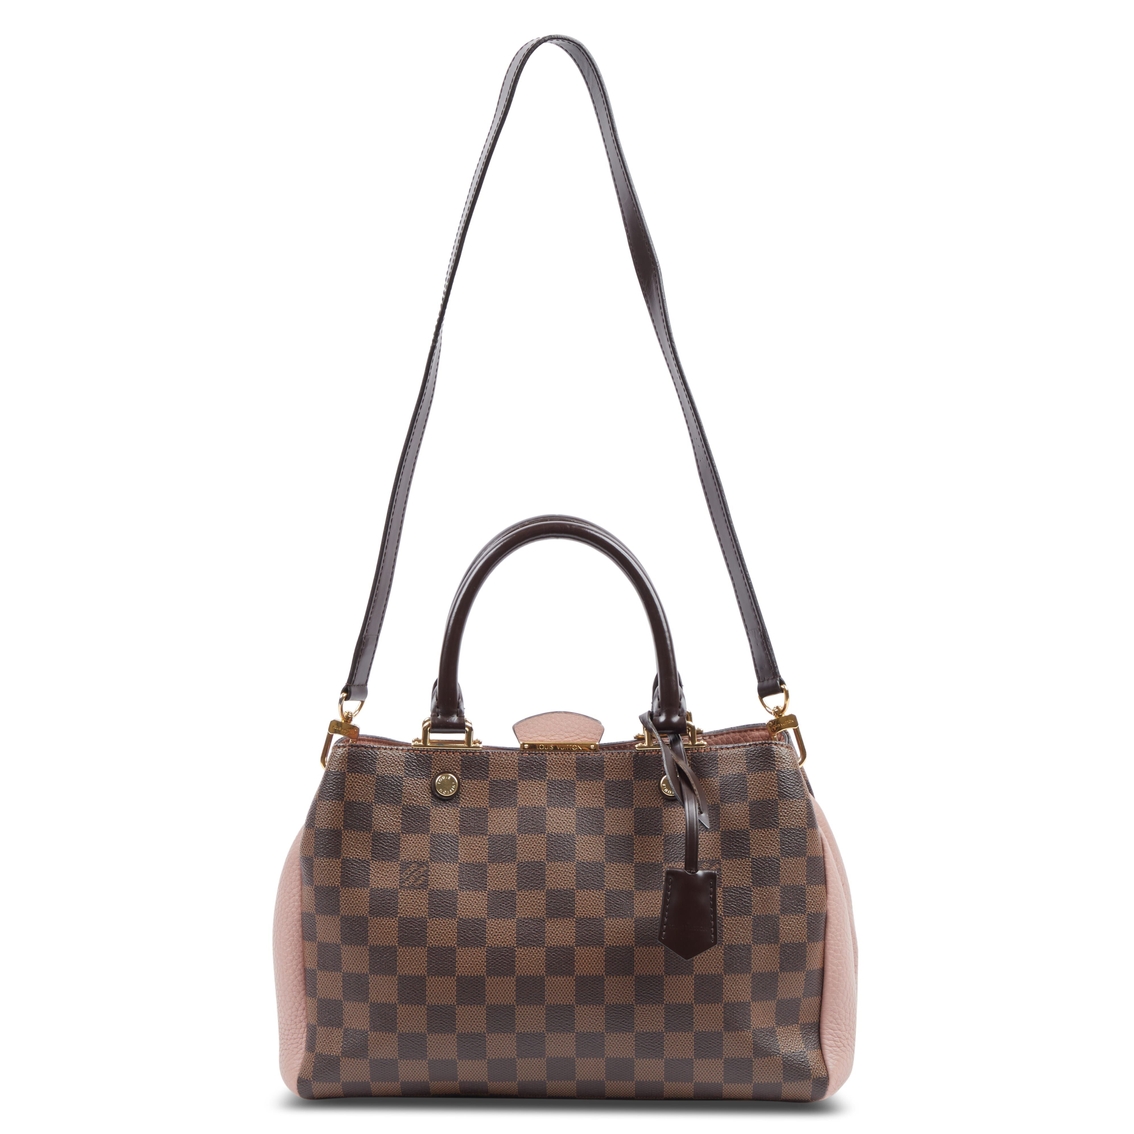 Louis Vuitton Brittany Handbag